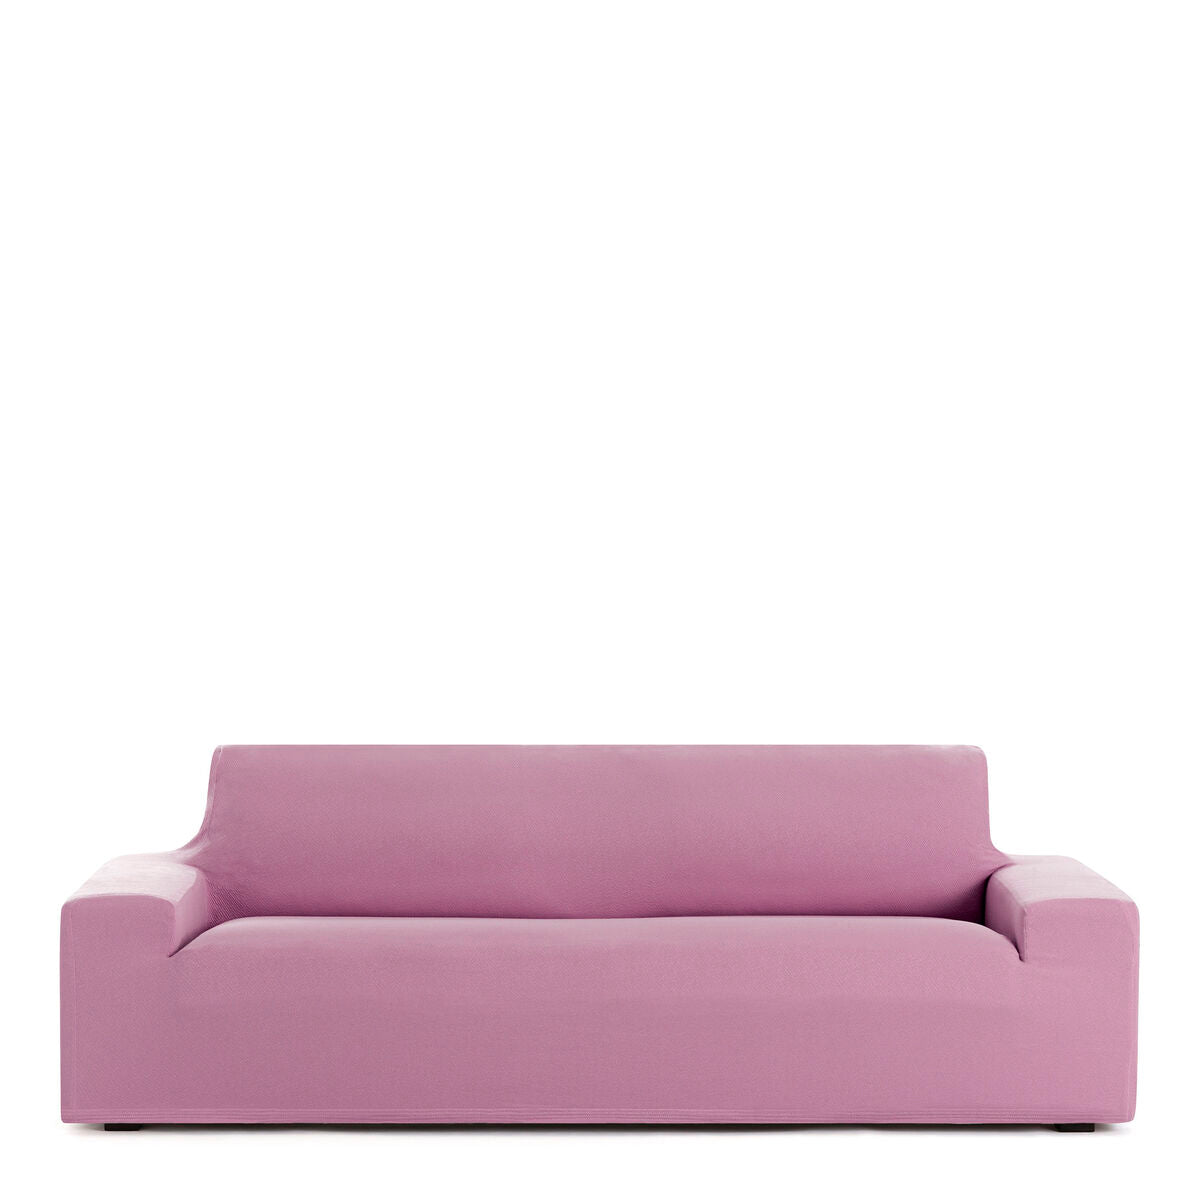 Copertina di divano Bronx Eysa rosa 70 x 110 x 210 cm